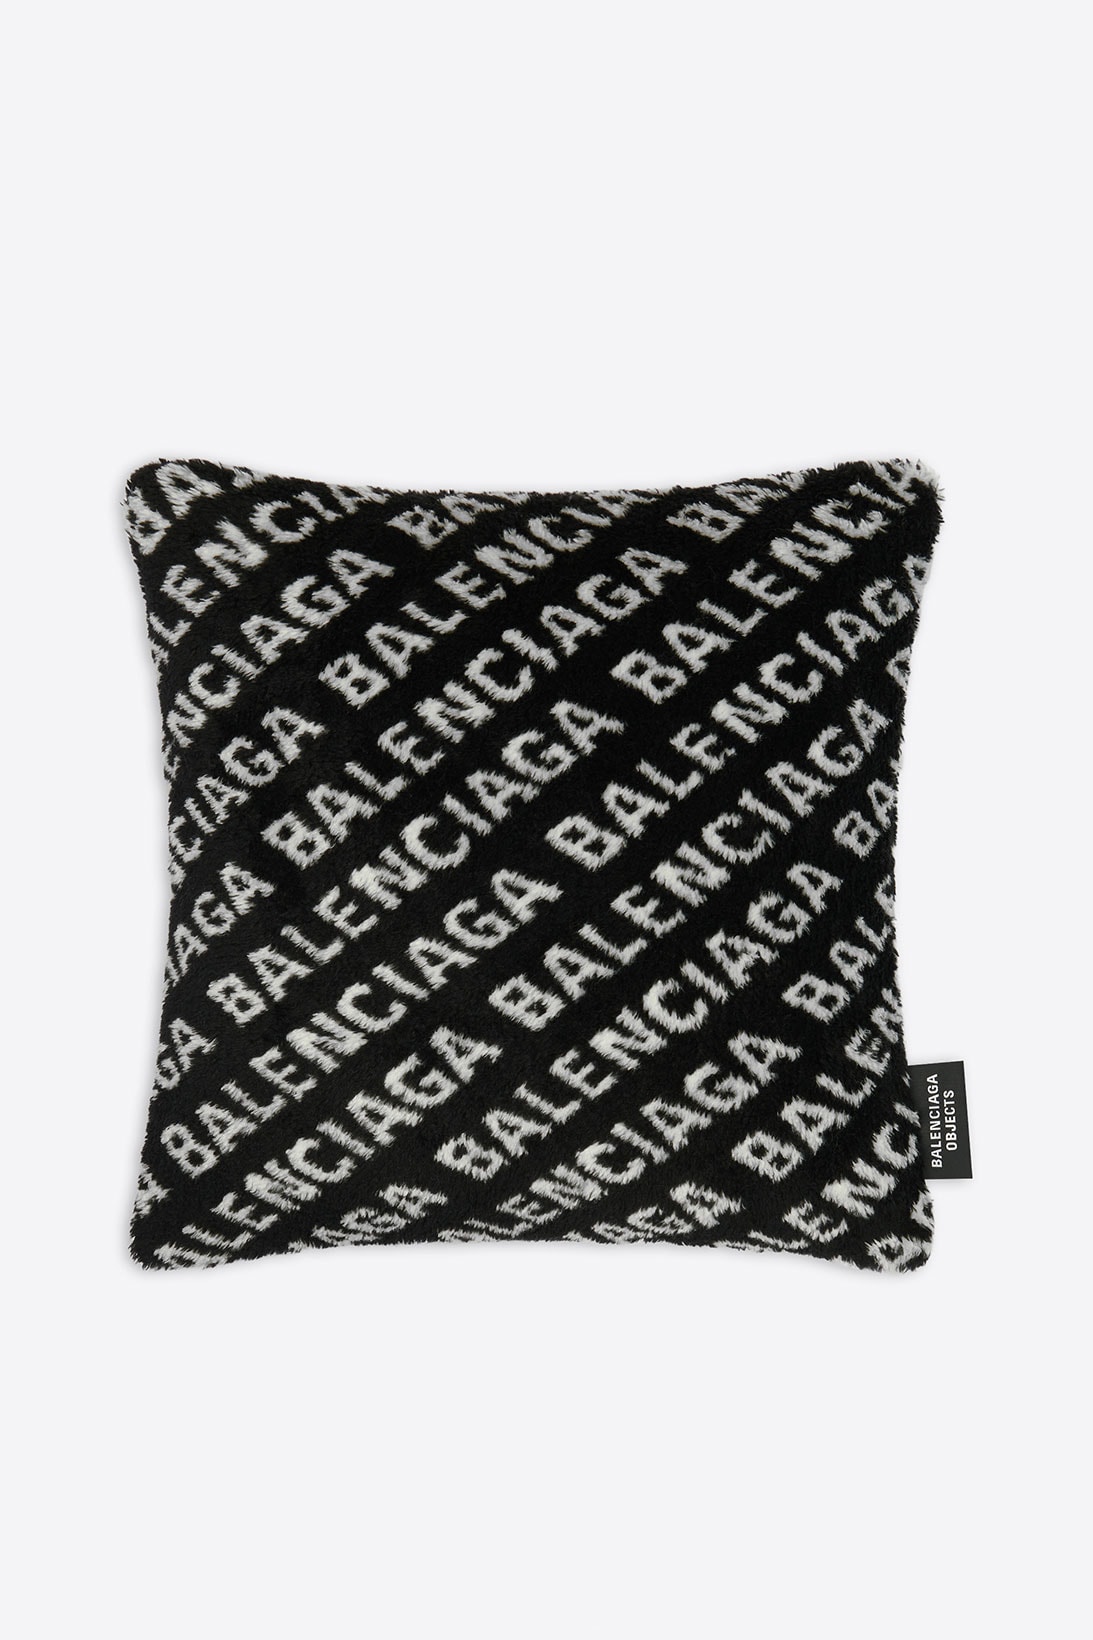 Balenciaga Holiday 2021 Objects Cushion Pillow